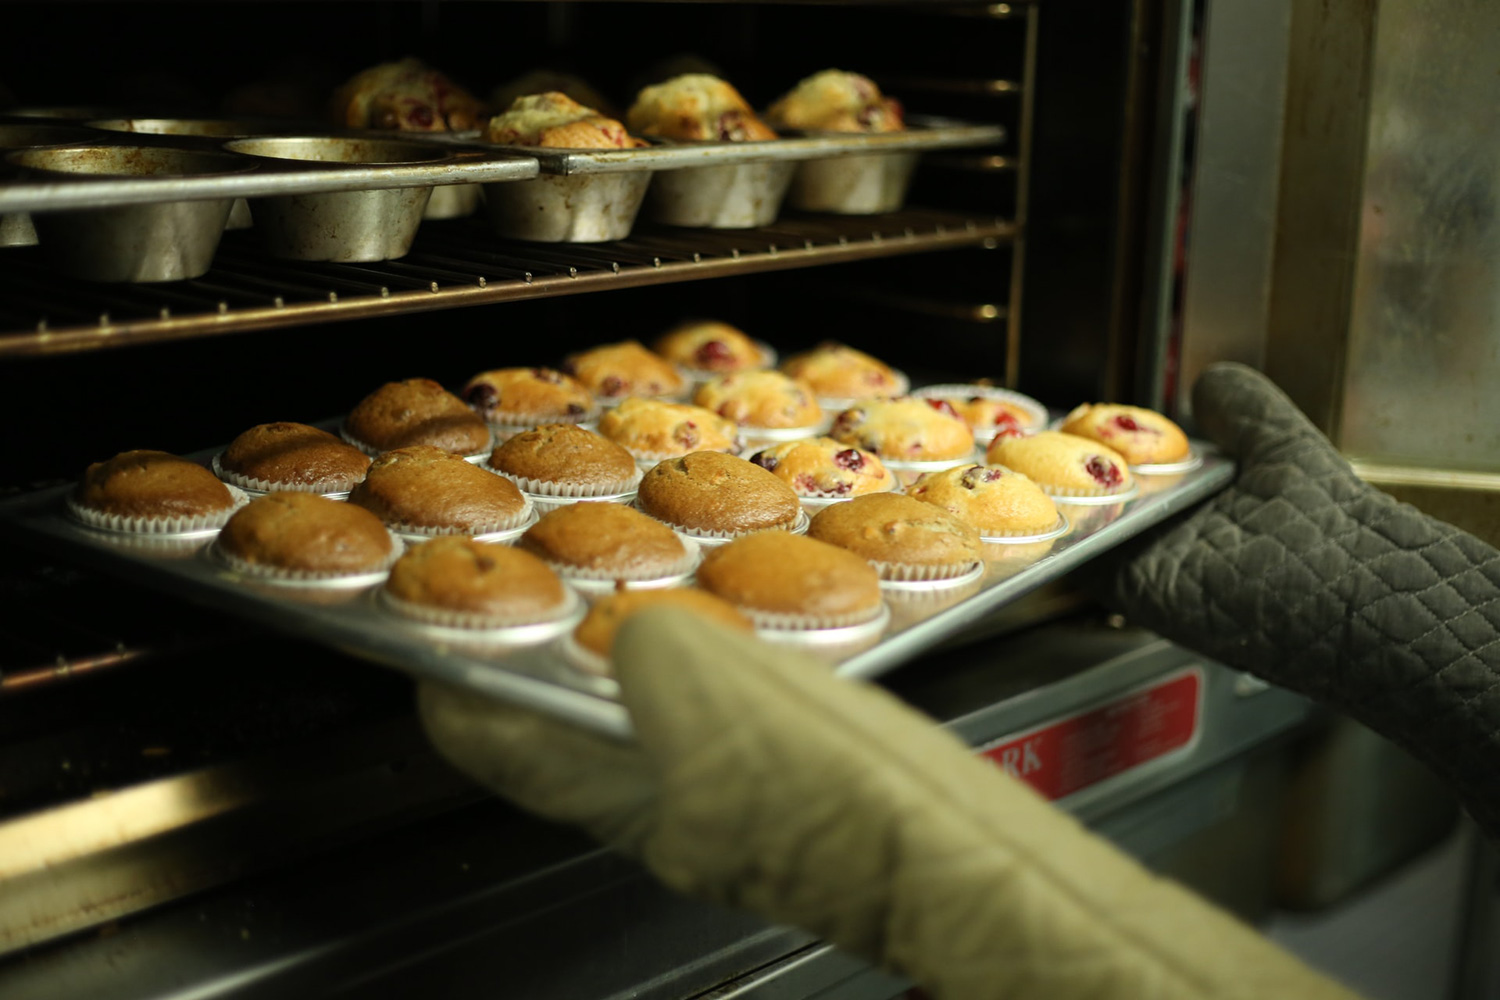 https://www.themanual.com/wp-content/uploads/sites/9/2022/06/baking-muffins-metal-baking-pan.jpg?fit=800%2C800&p=1